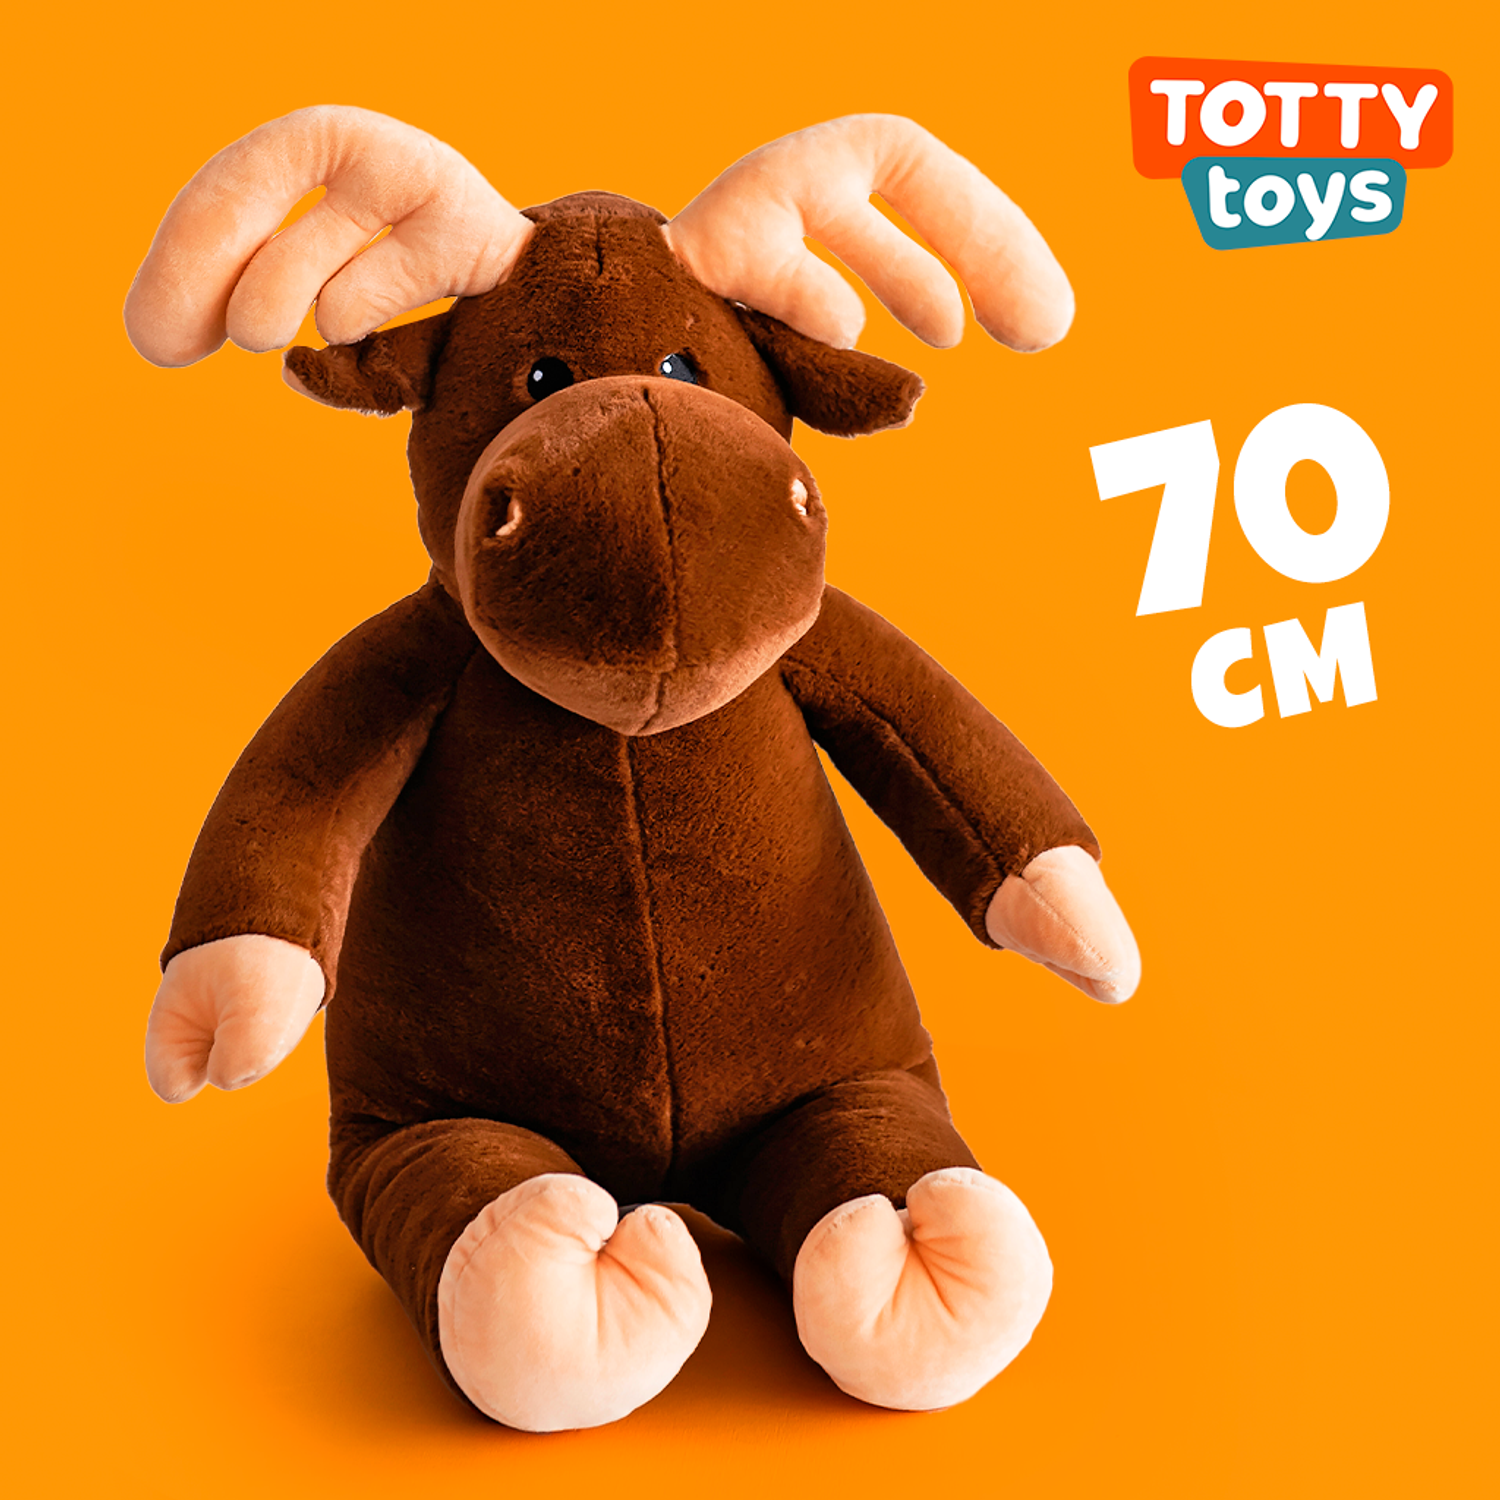 Мягкая игрушка TOTTY TOYS лось 70 см антистресс развивающая обнимашка - фото 1